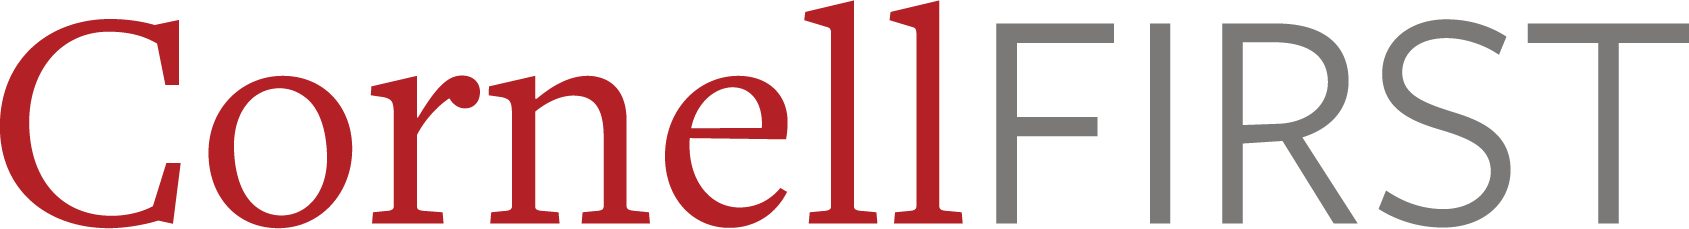 Cornell FIRST logo